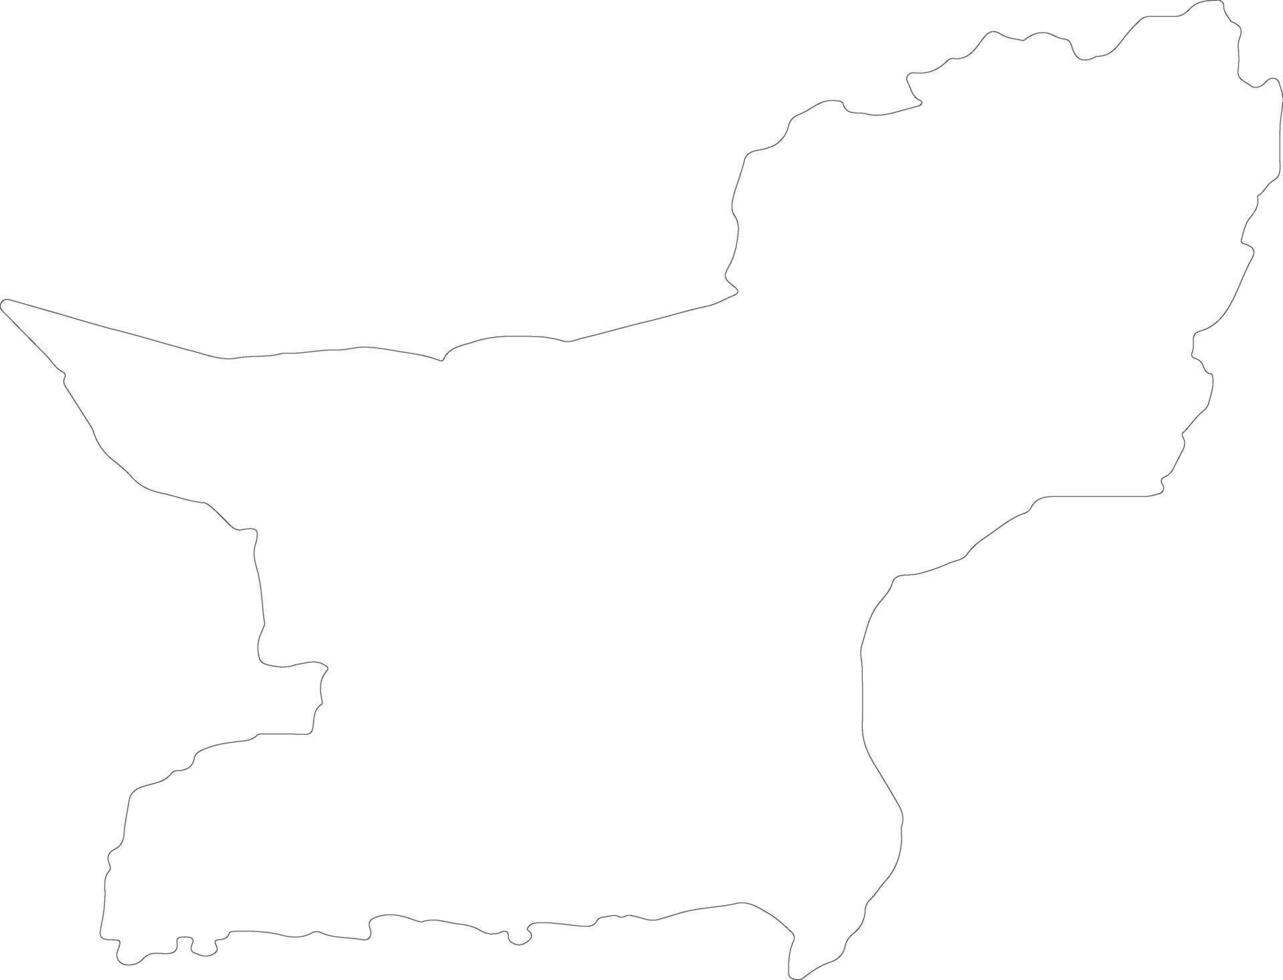 Baluchistan Pakistan outline map vector